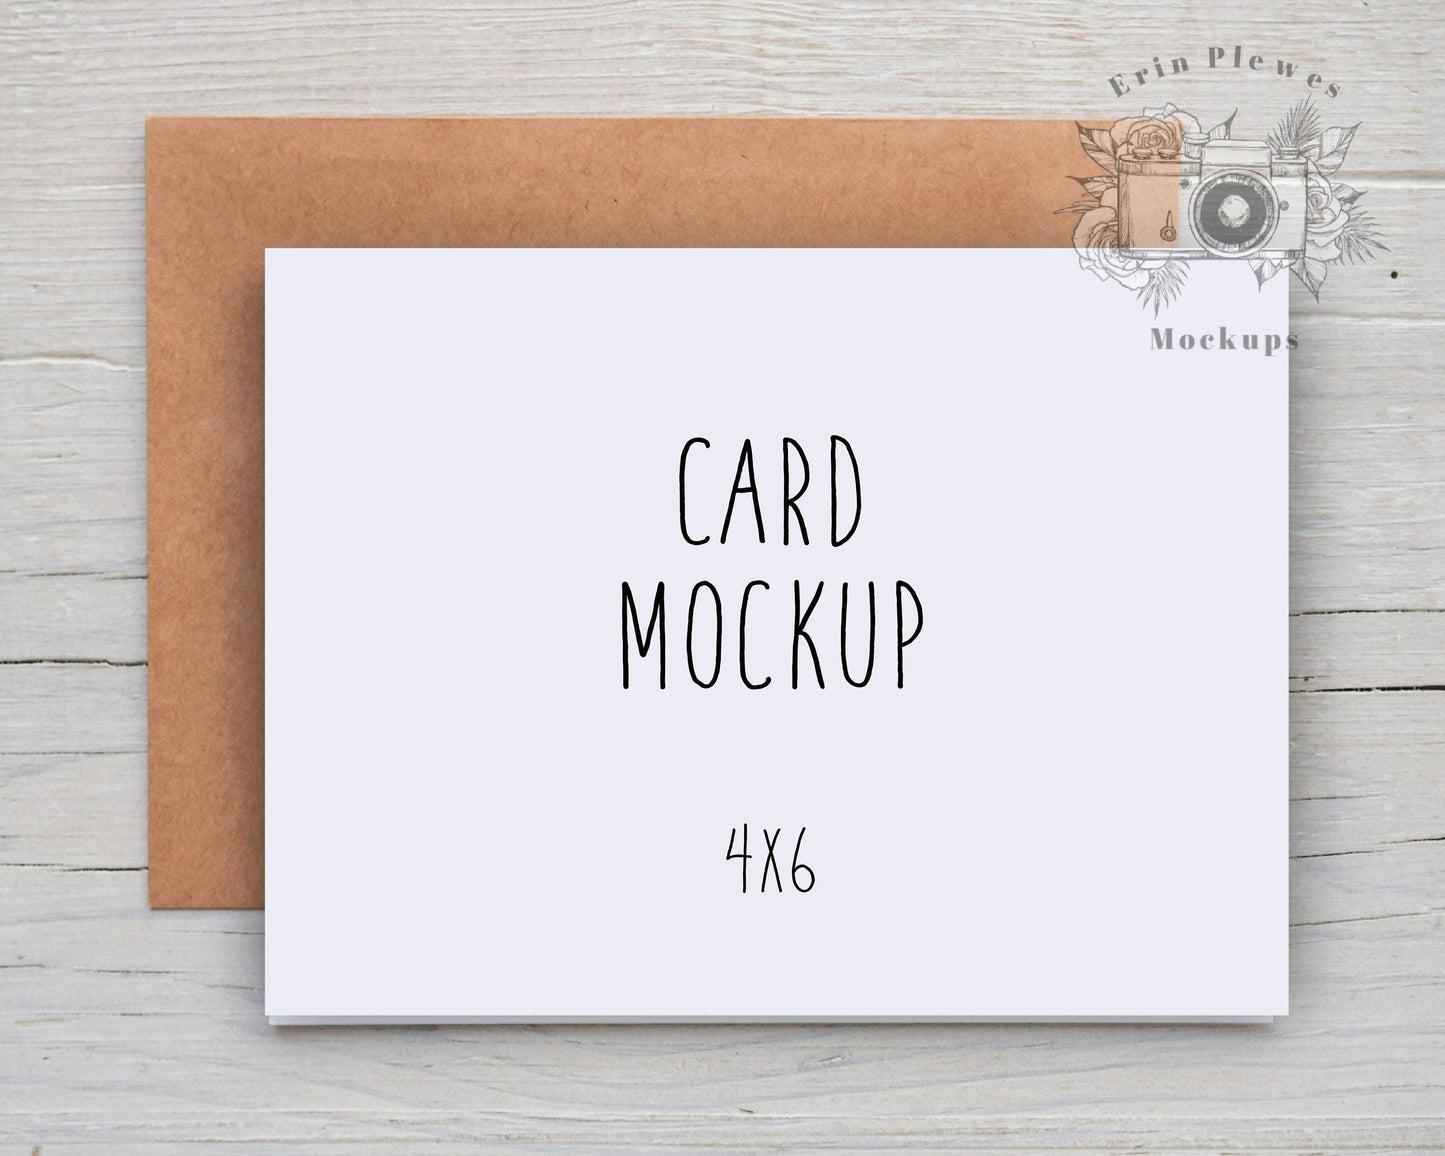 Erin Plewes Mockups 4x6 Card Mockup with Kraft Envelope, 4"x6" Thank You Card Mock Up for Rustic Wedding, Jpeg Instant Digital Download